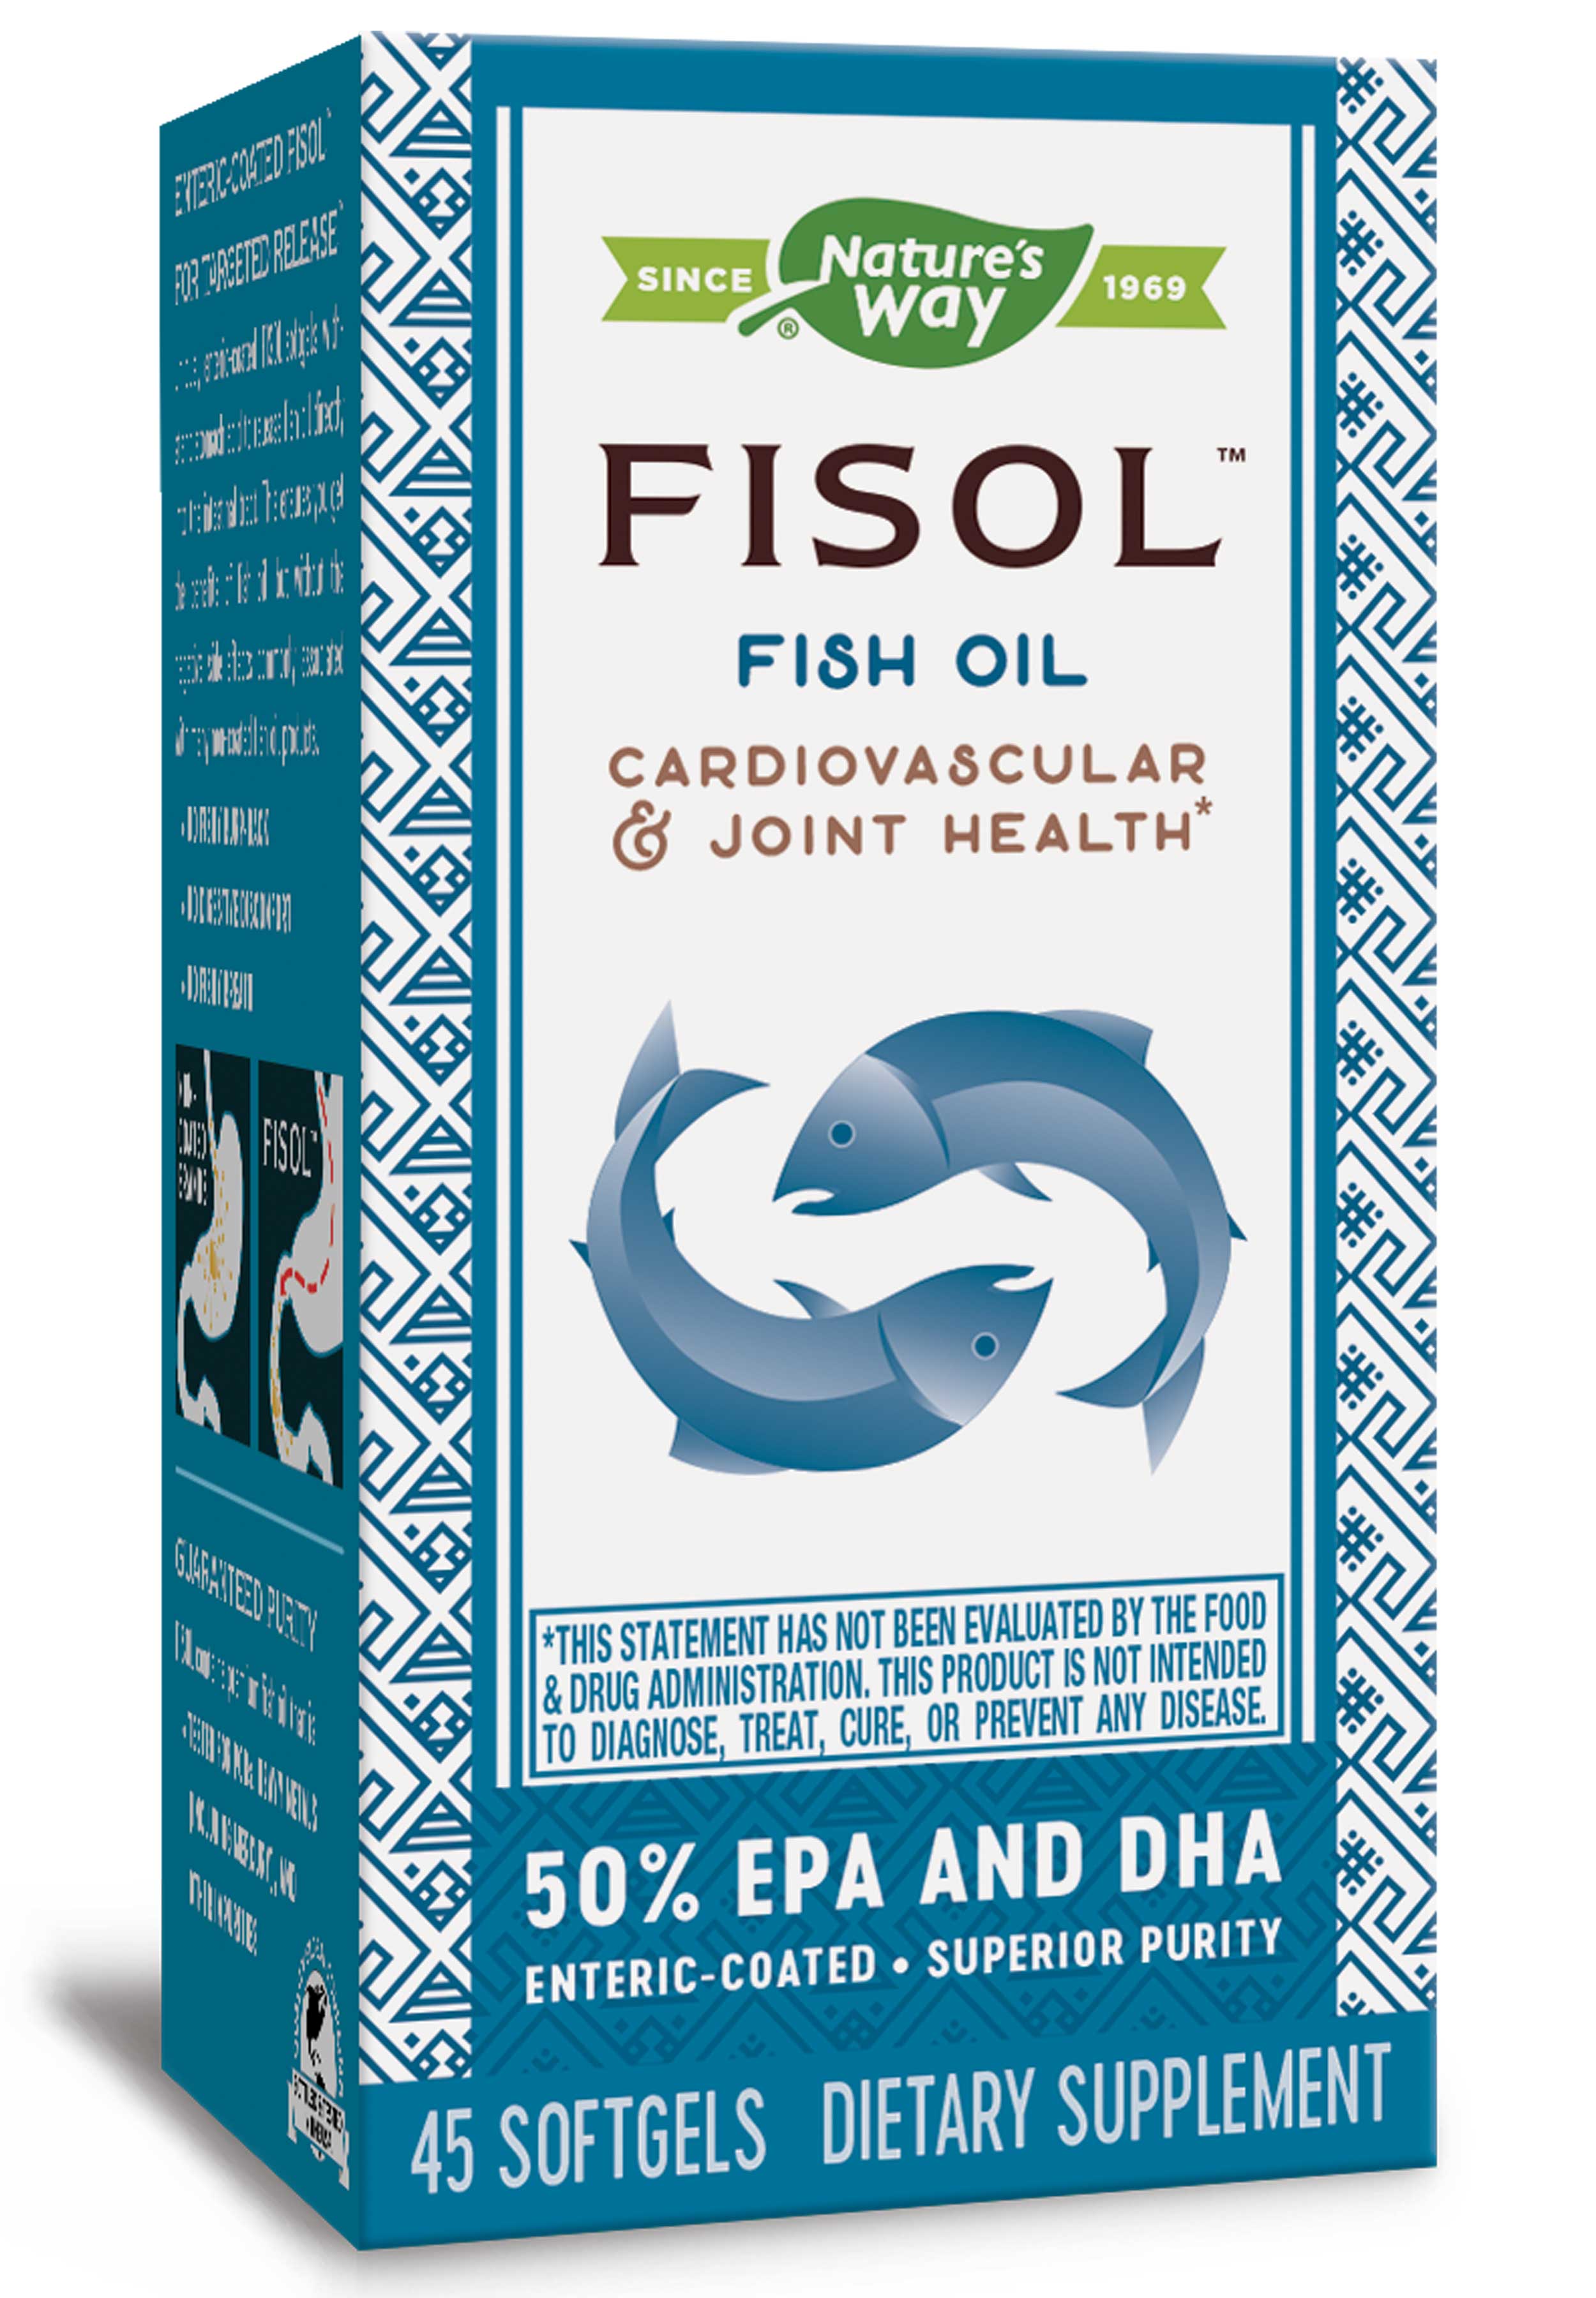 Nature's Way Fisol Fish Oil